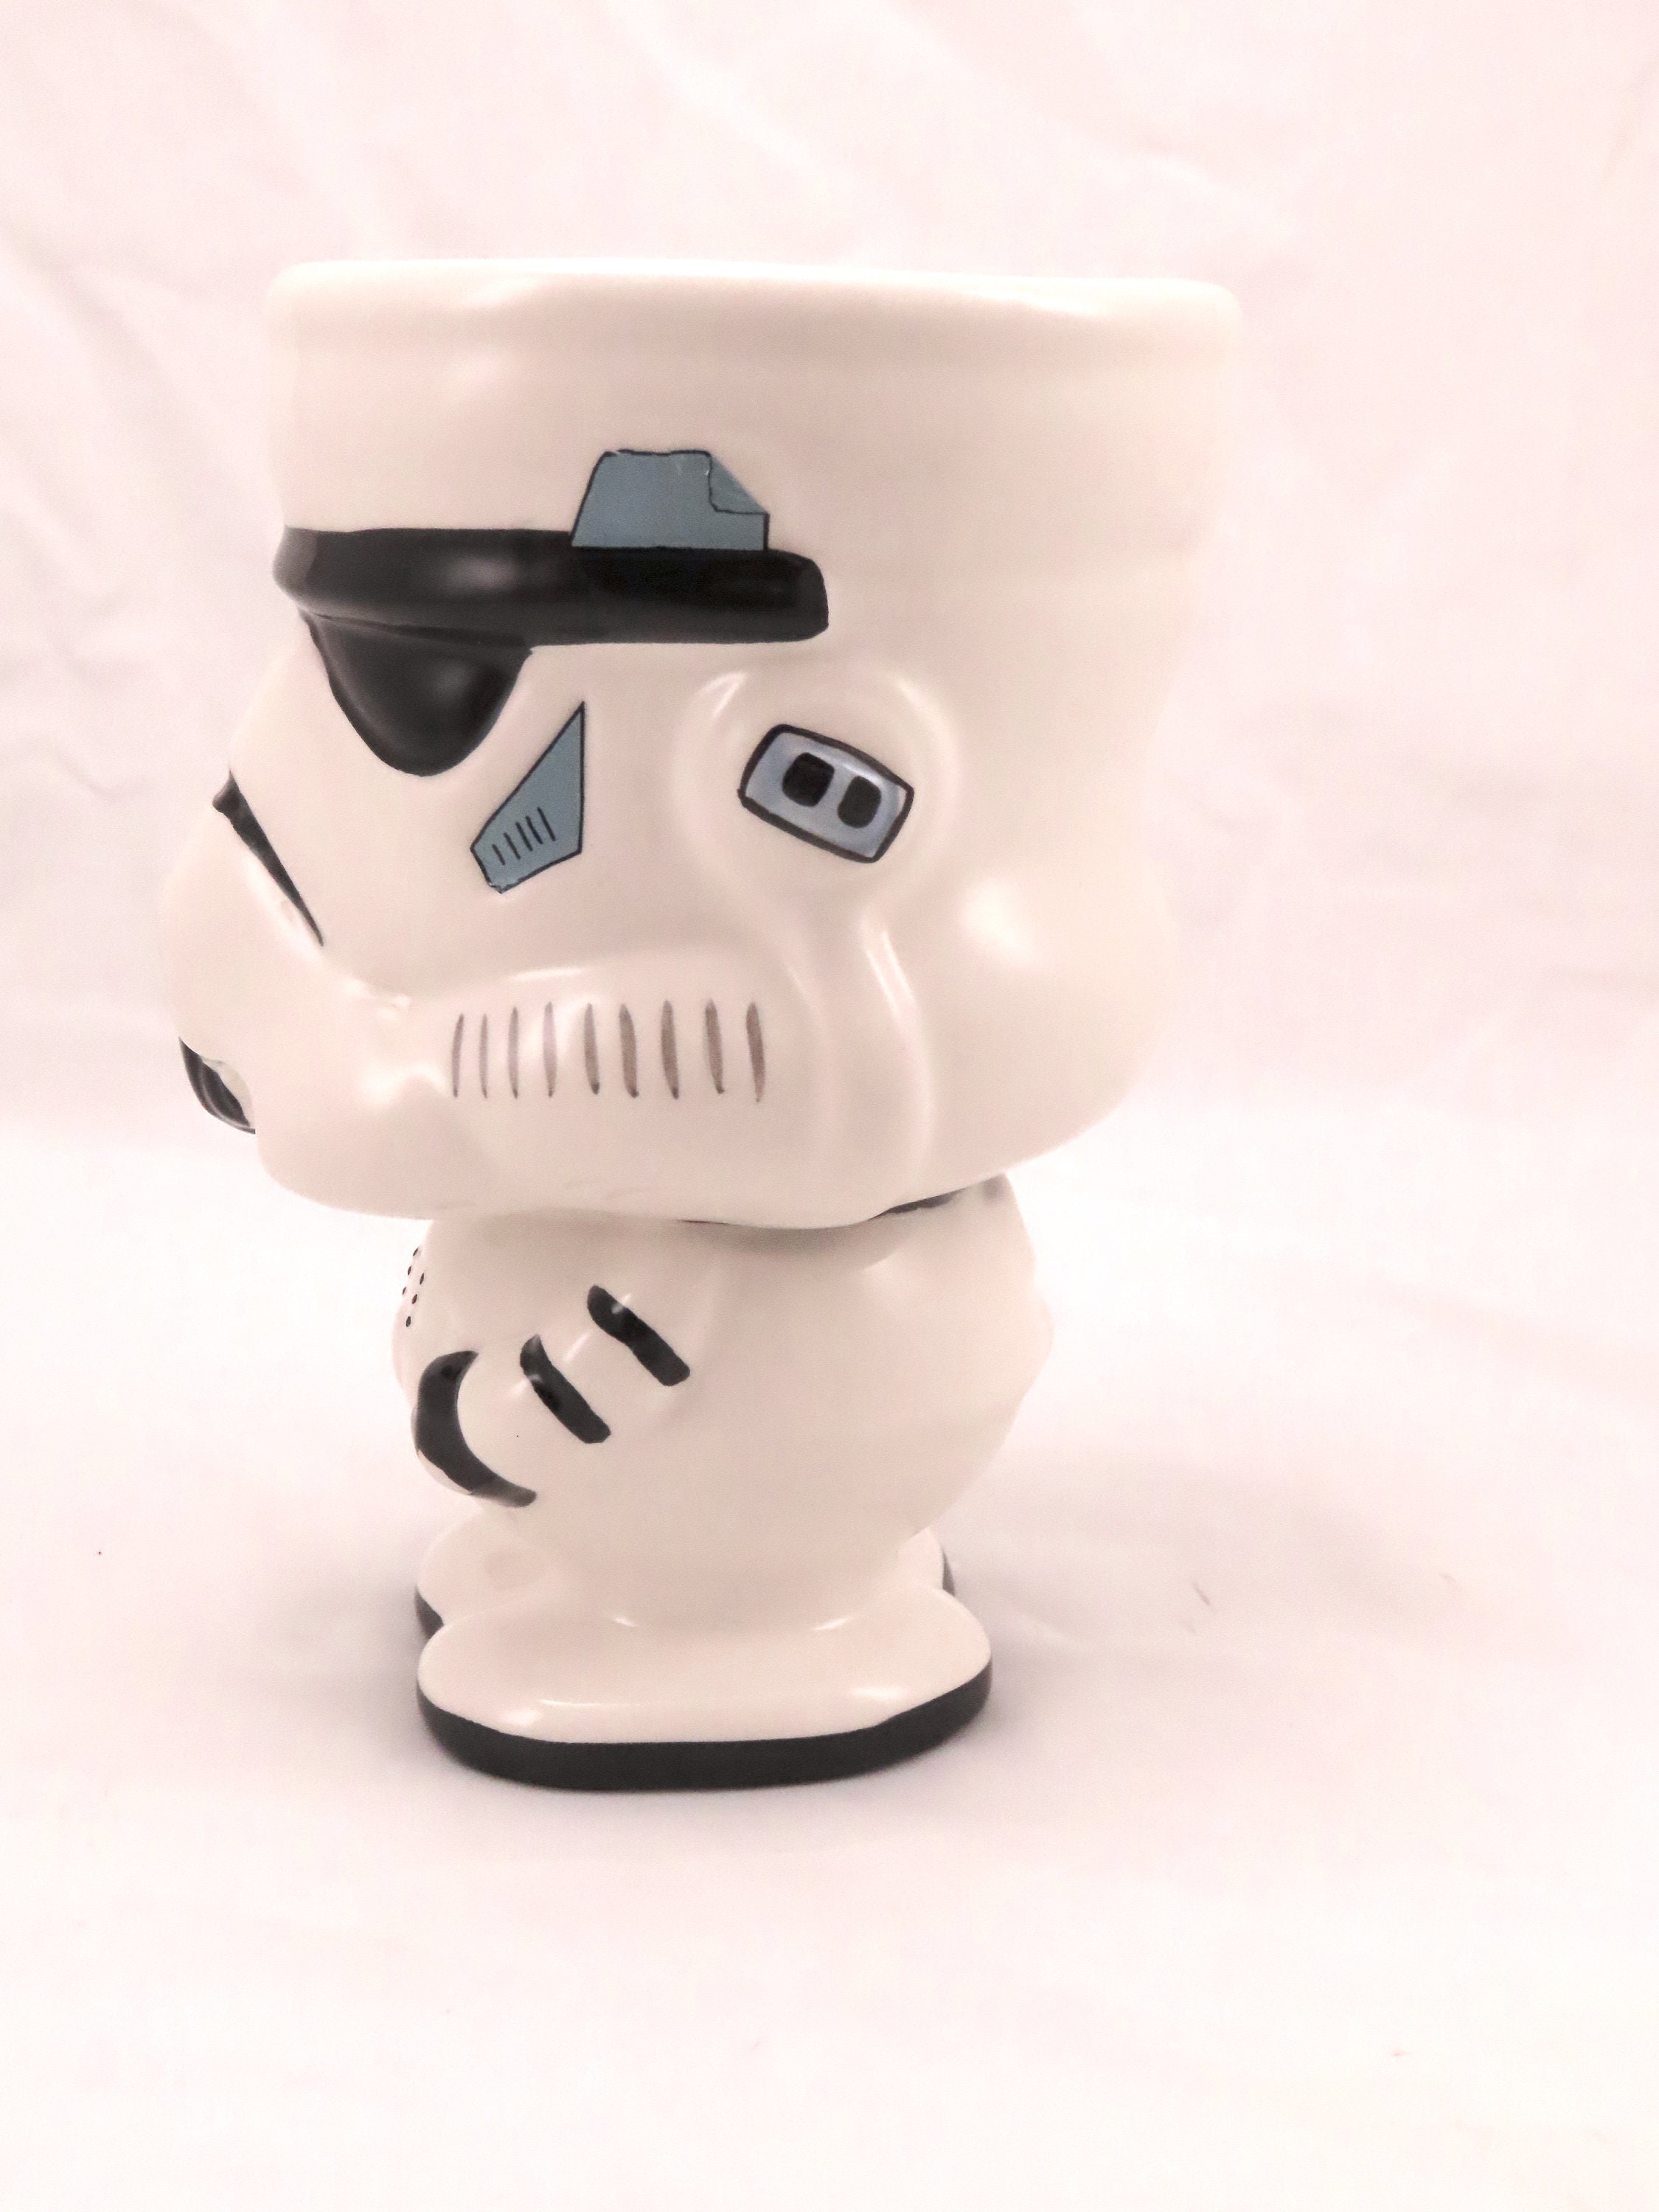 Star Wars Mug General Grievous Watercolor Starwars Art Print cup Coffe Tea  Kitchen Decor 11 oz White Mug